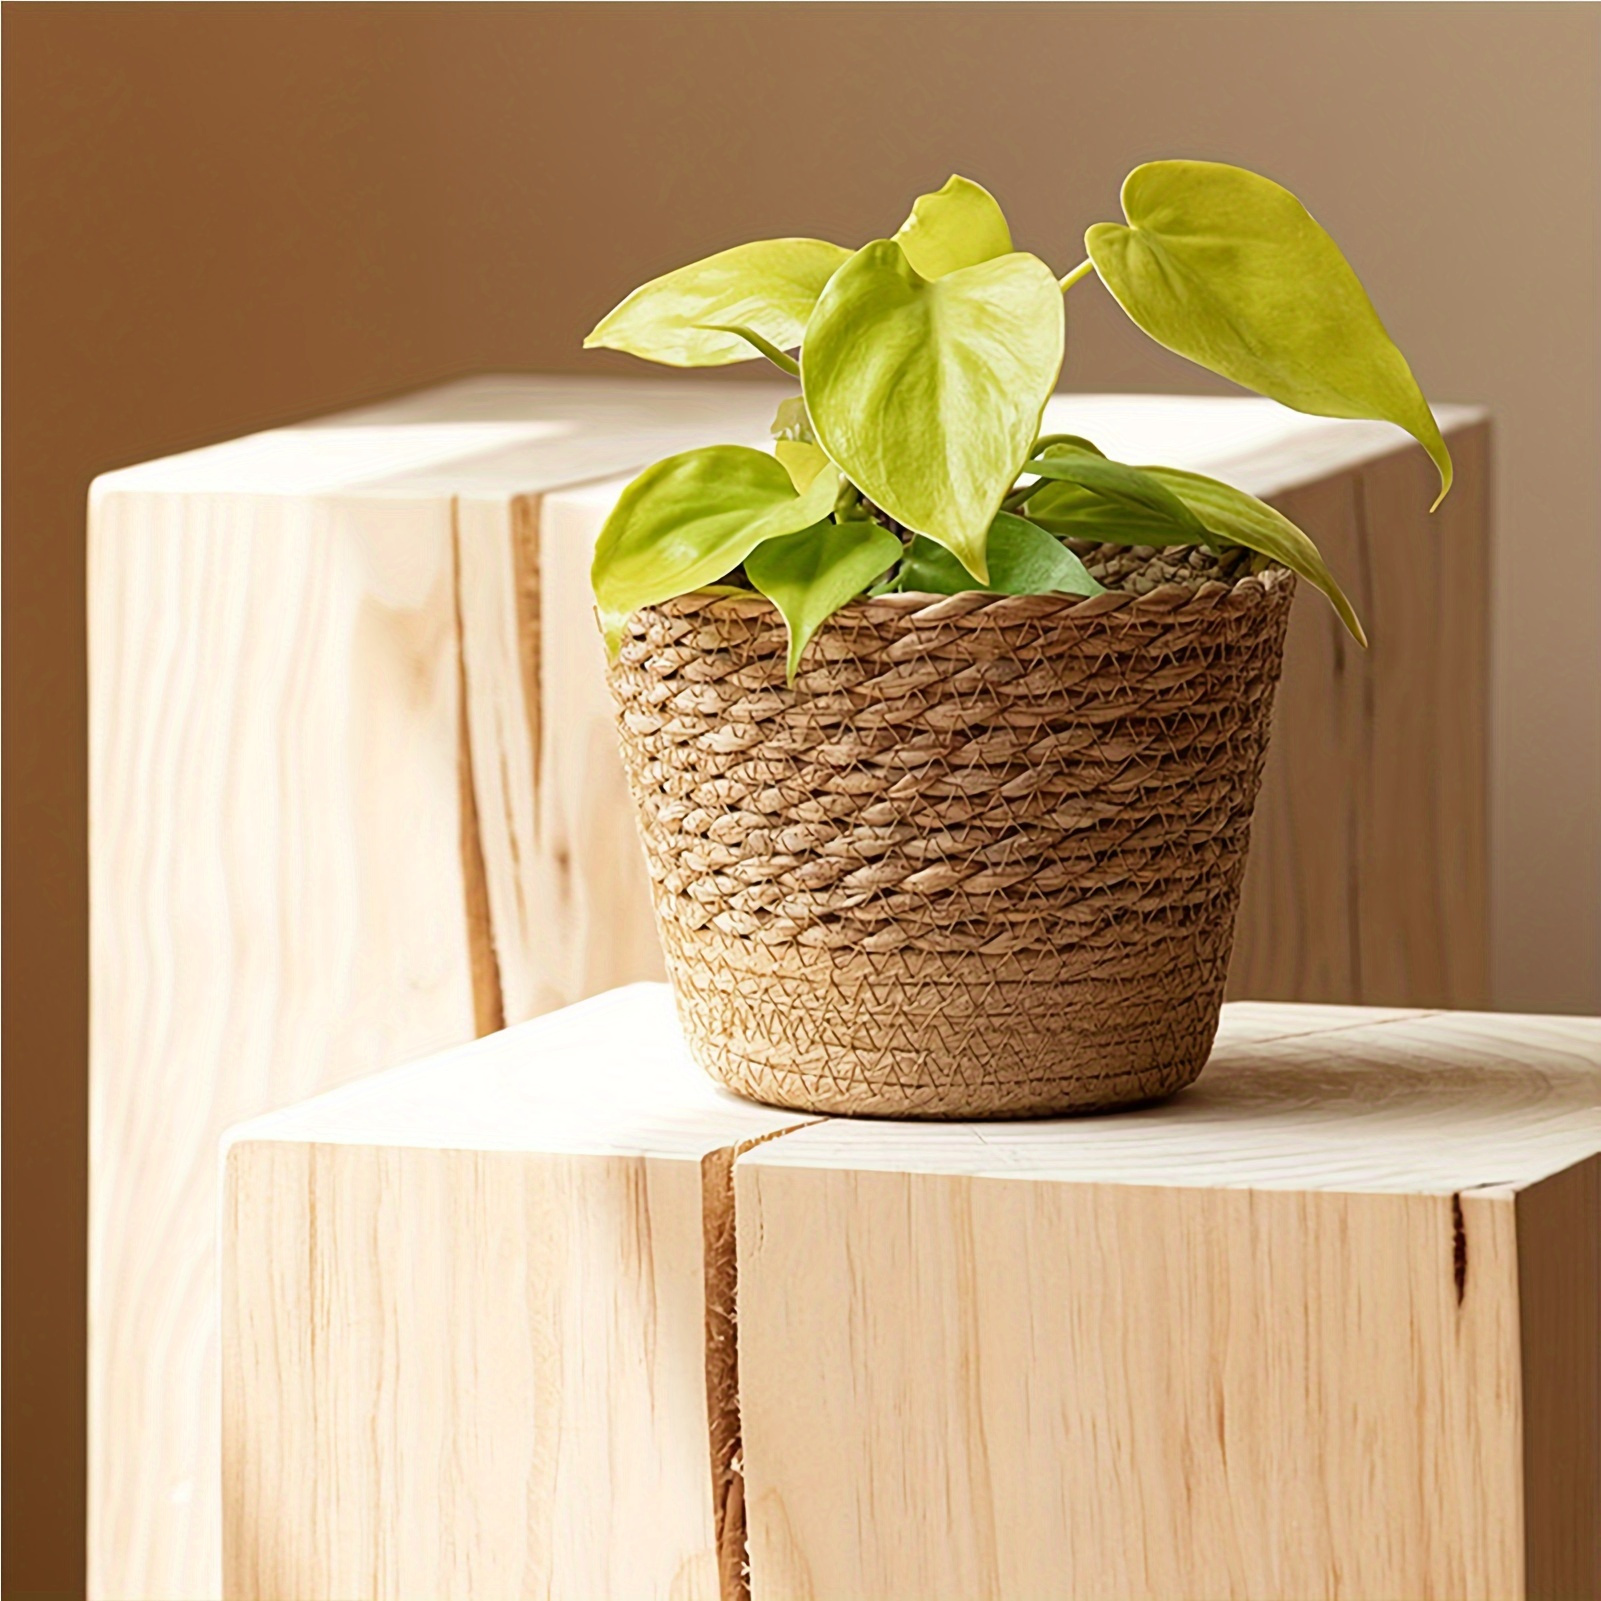 

Handcrafted Natural Woven Planter Basket - Versatile Garden Flower Pot For Living Room, Bedroom, Or Balcony Decor